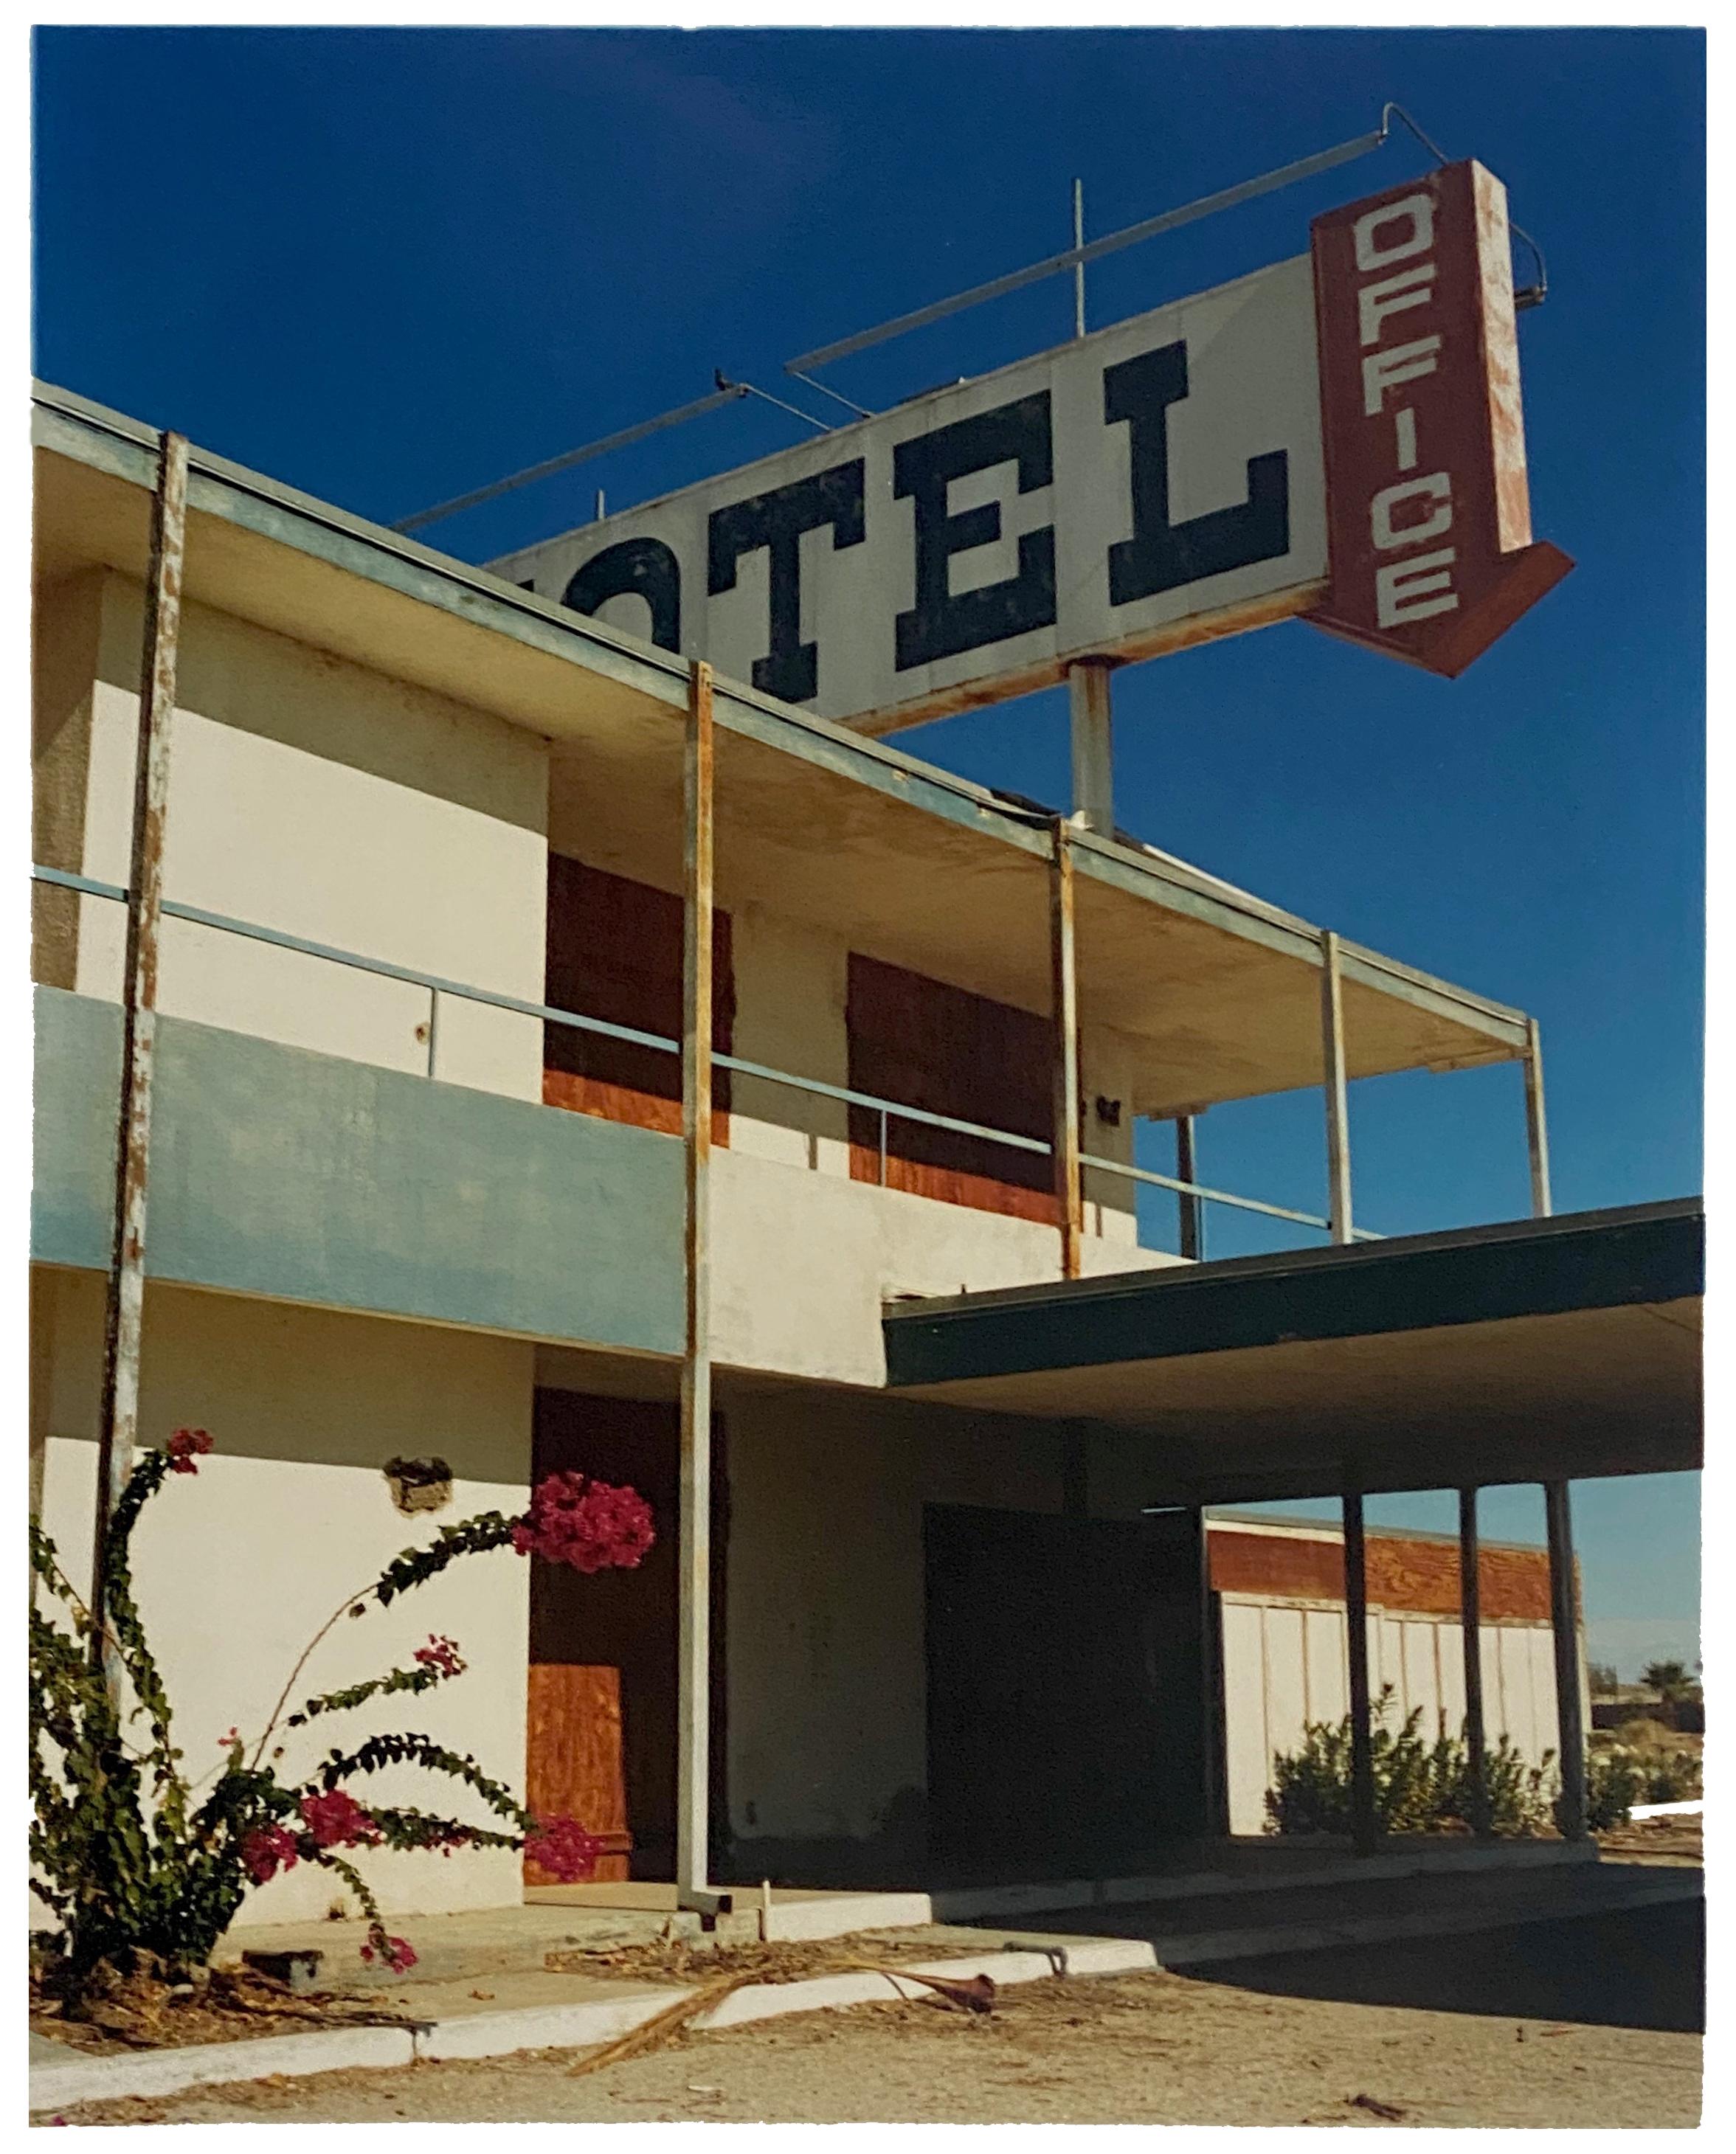 Richard Heeps Figurative Photograph - North Shore Motel Office II, Salton Sea, California - Architectural Color Photo